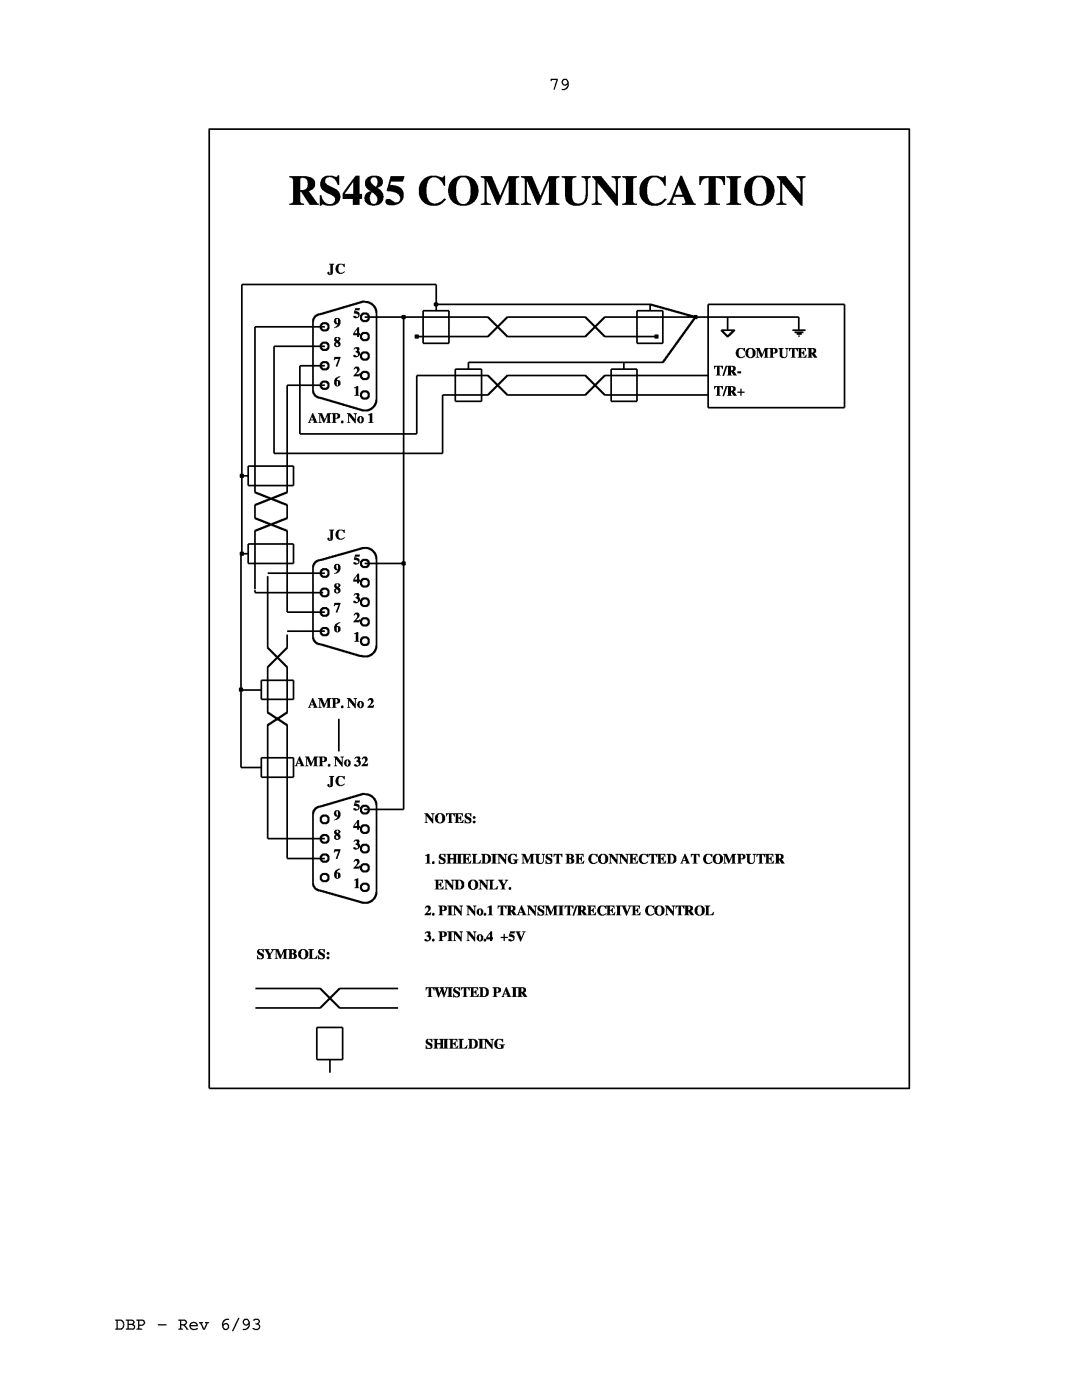 Elmo DBP SERIES manual RS485 COMMUNICATION 